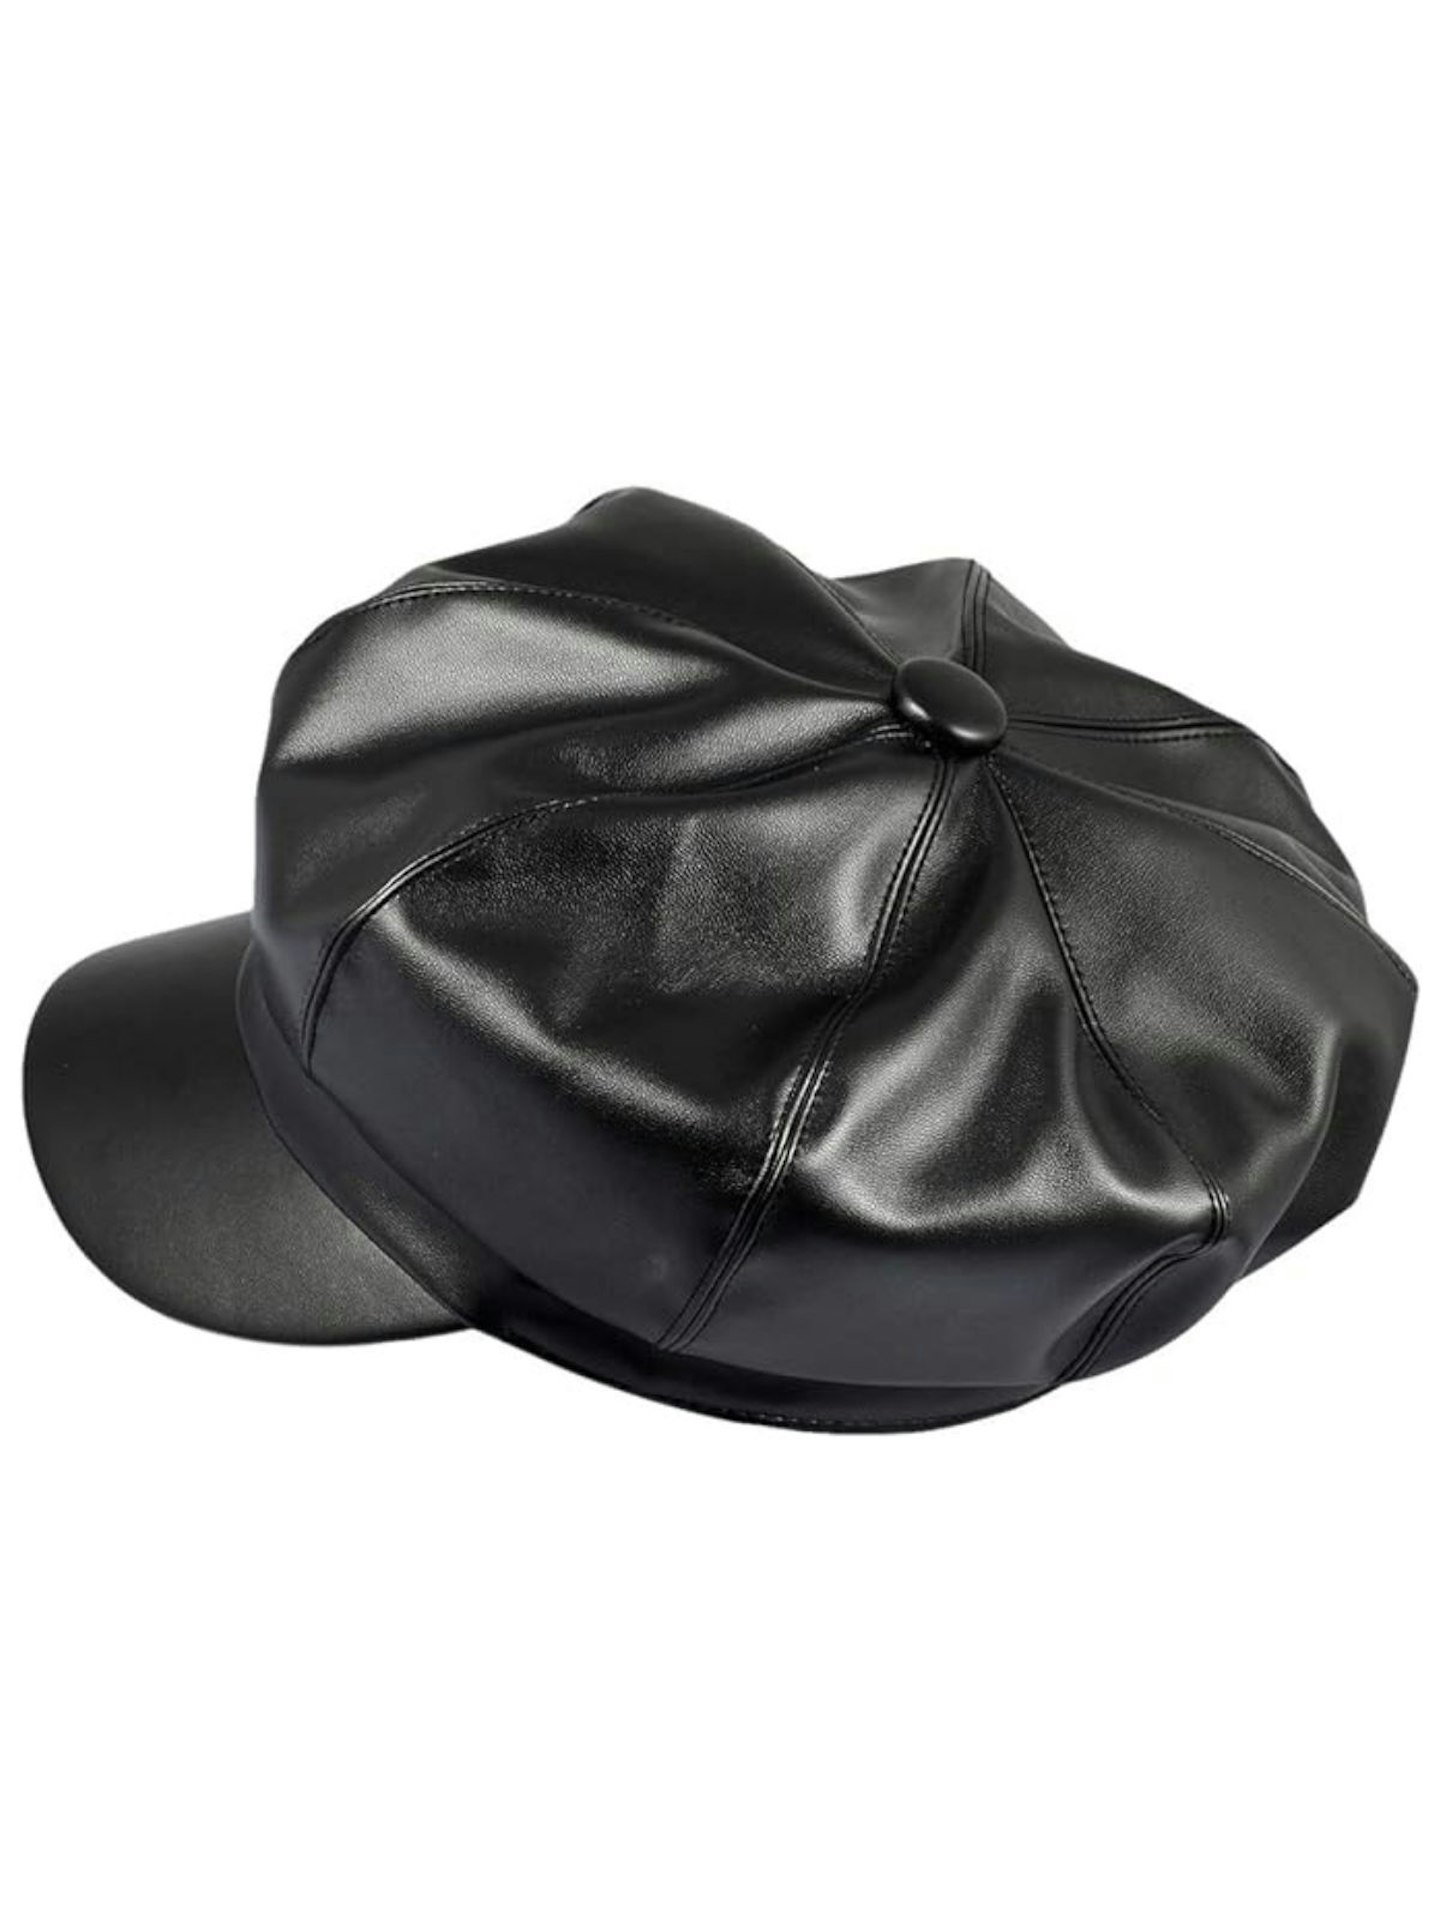 KYEYGWO Leather Baker Hat